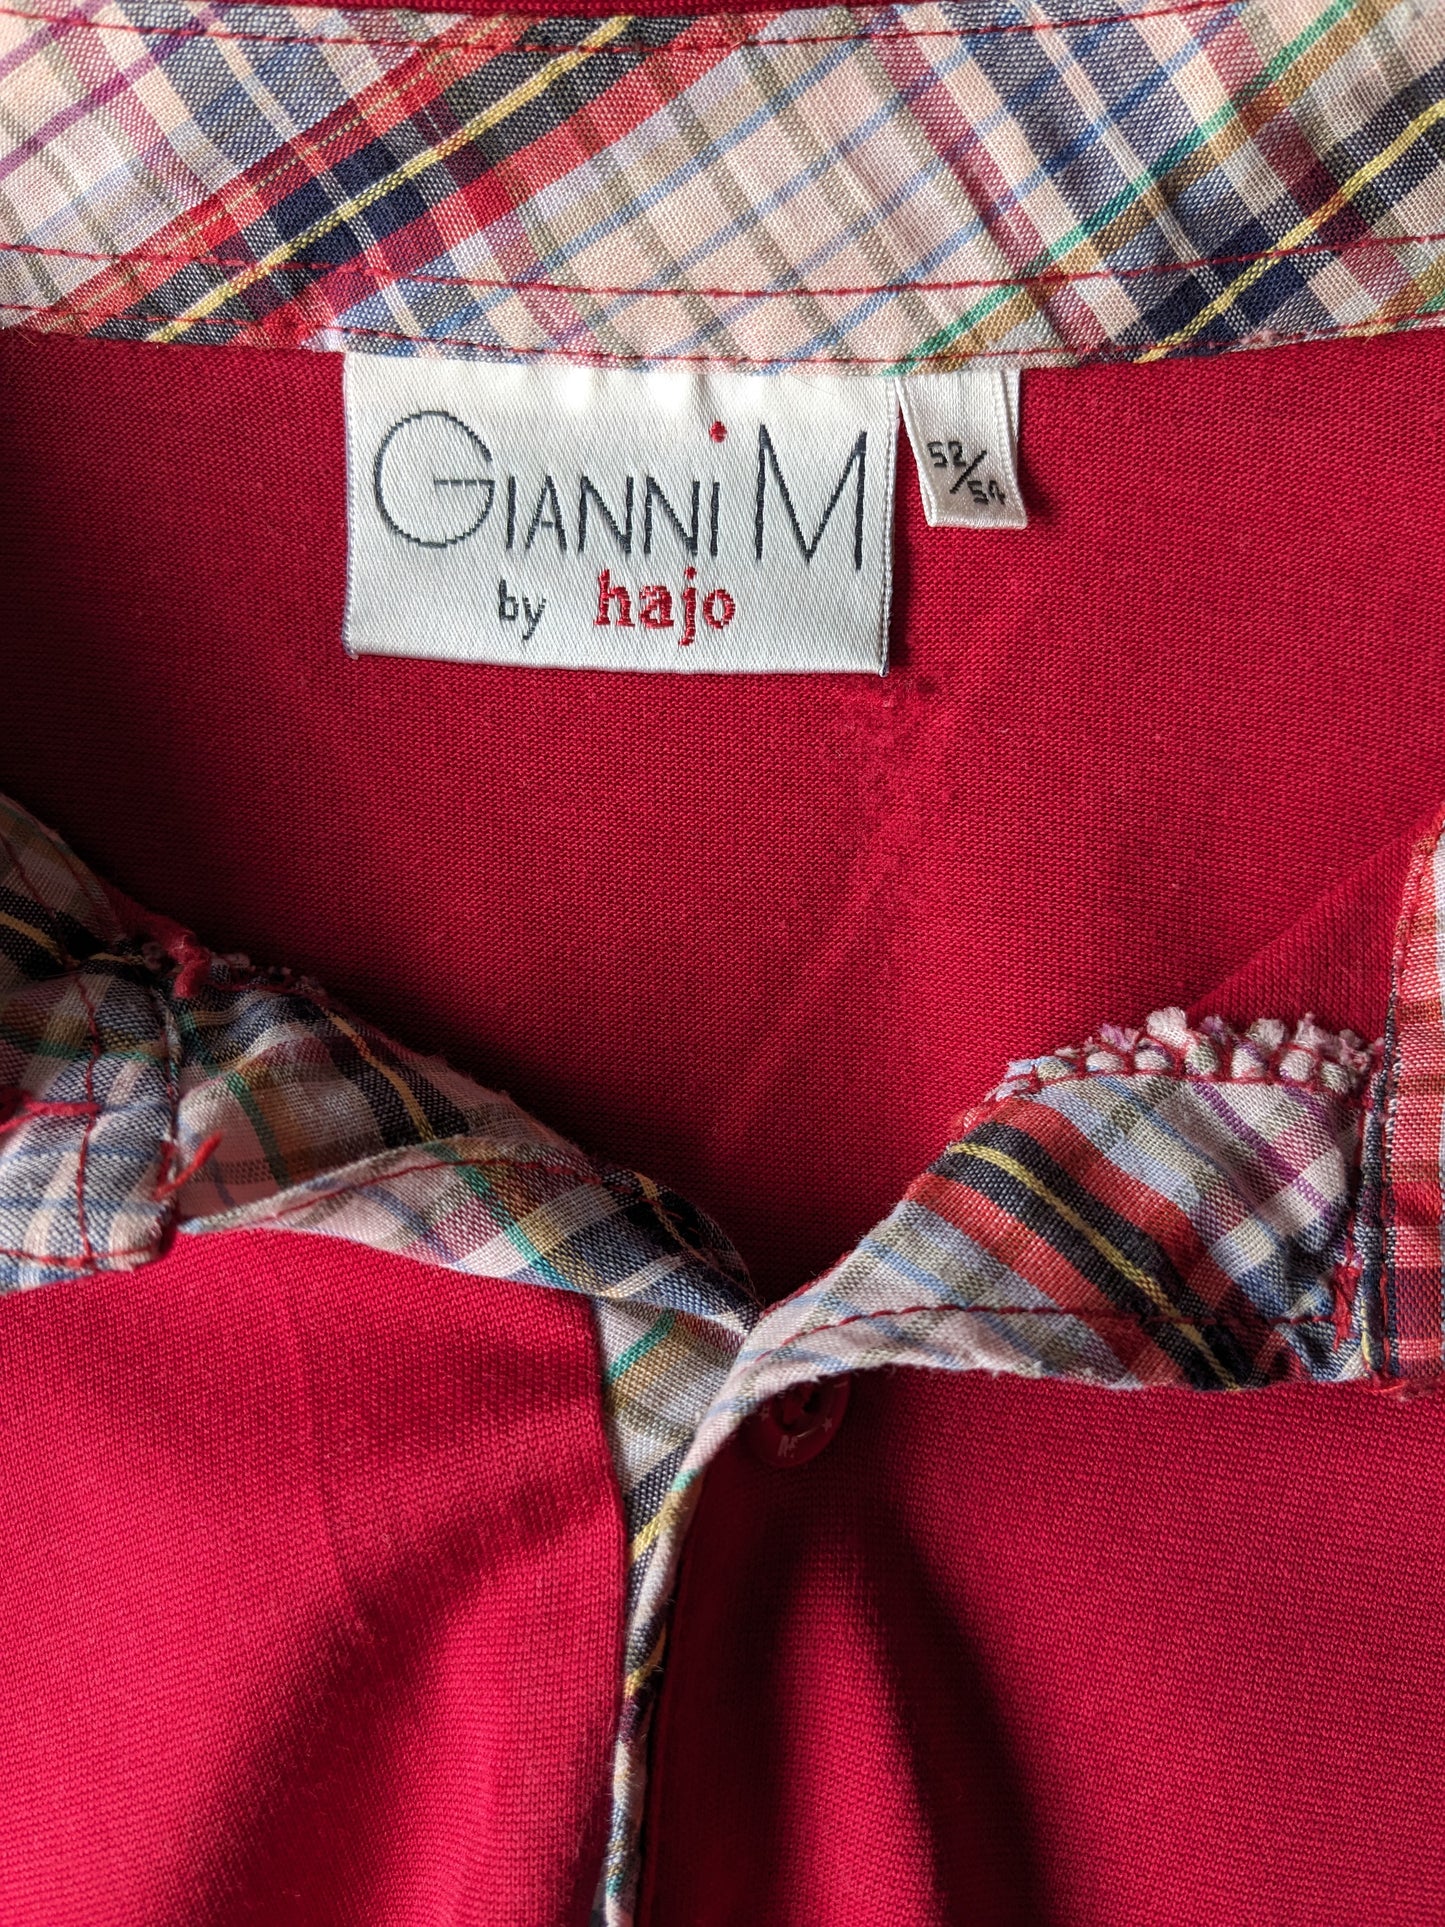 Gianni M por Hajo Vintage Polo con banda elástica. Color rojo. Tamaño L / XL.